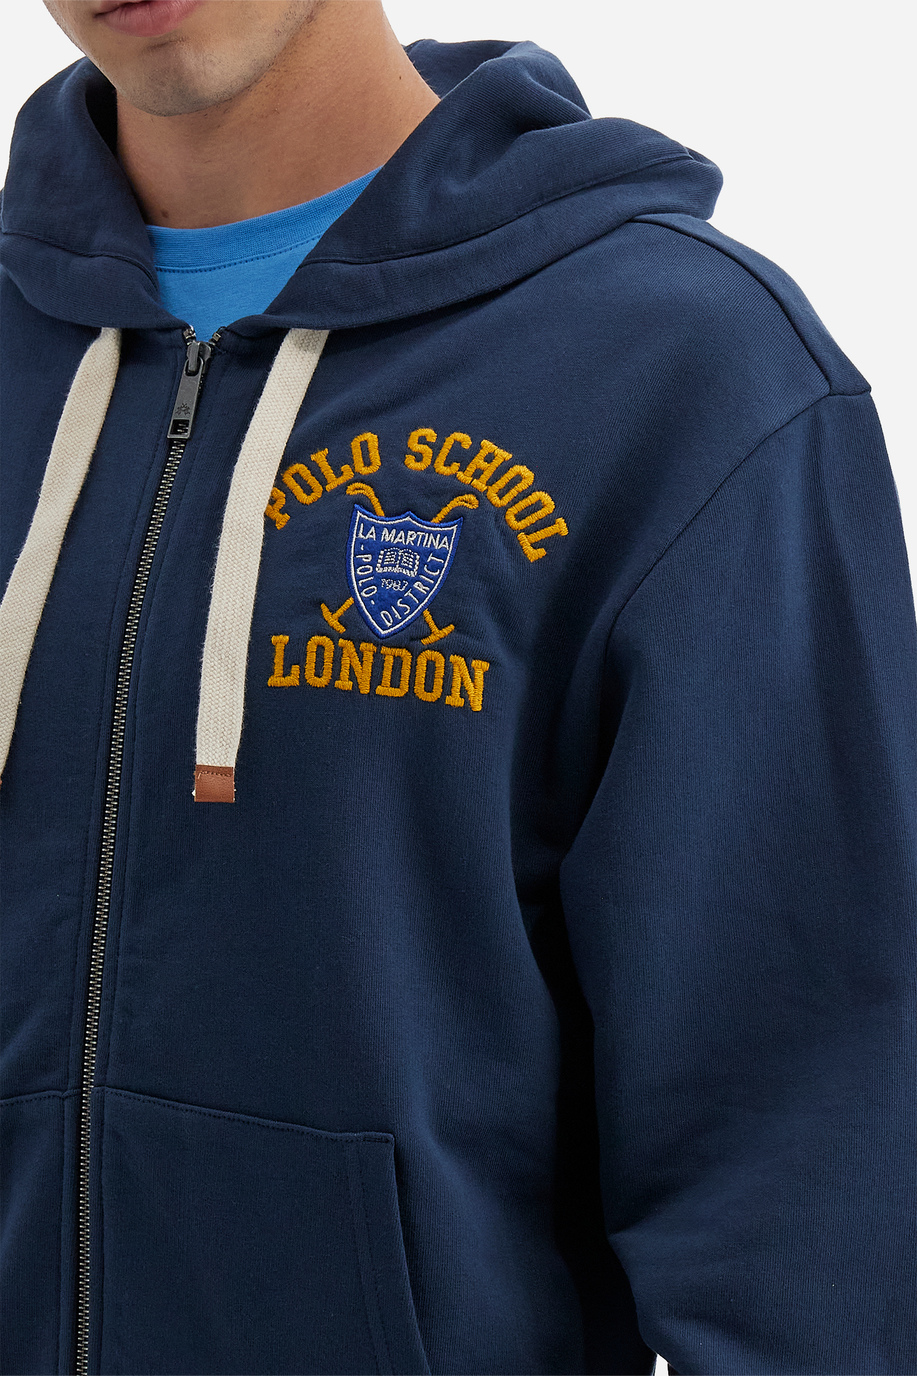 Polo Academy men's full zip hooded sweatshirt in solid color with small logo - Valoris - Sweatshirts | La Martina - Official Online Shop